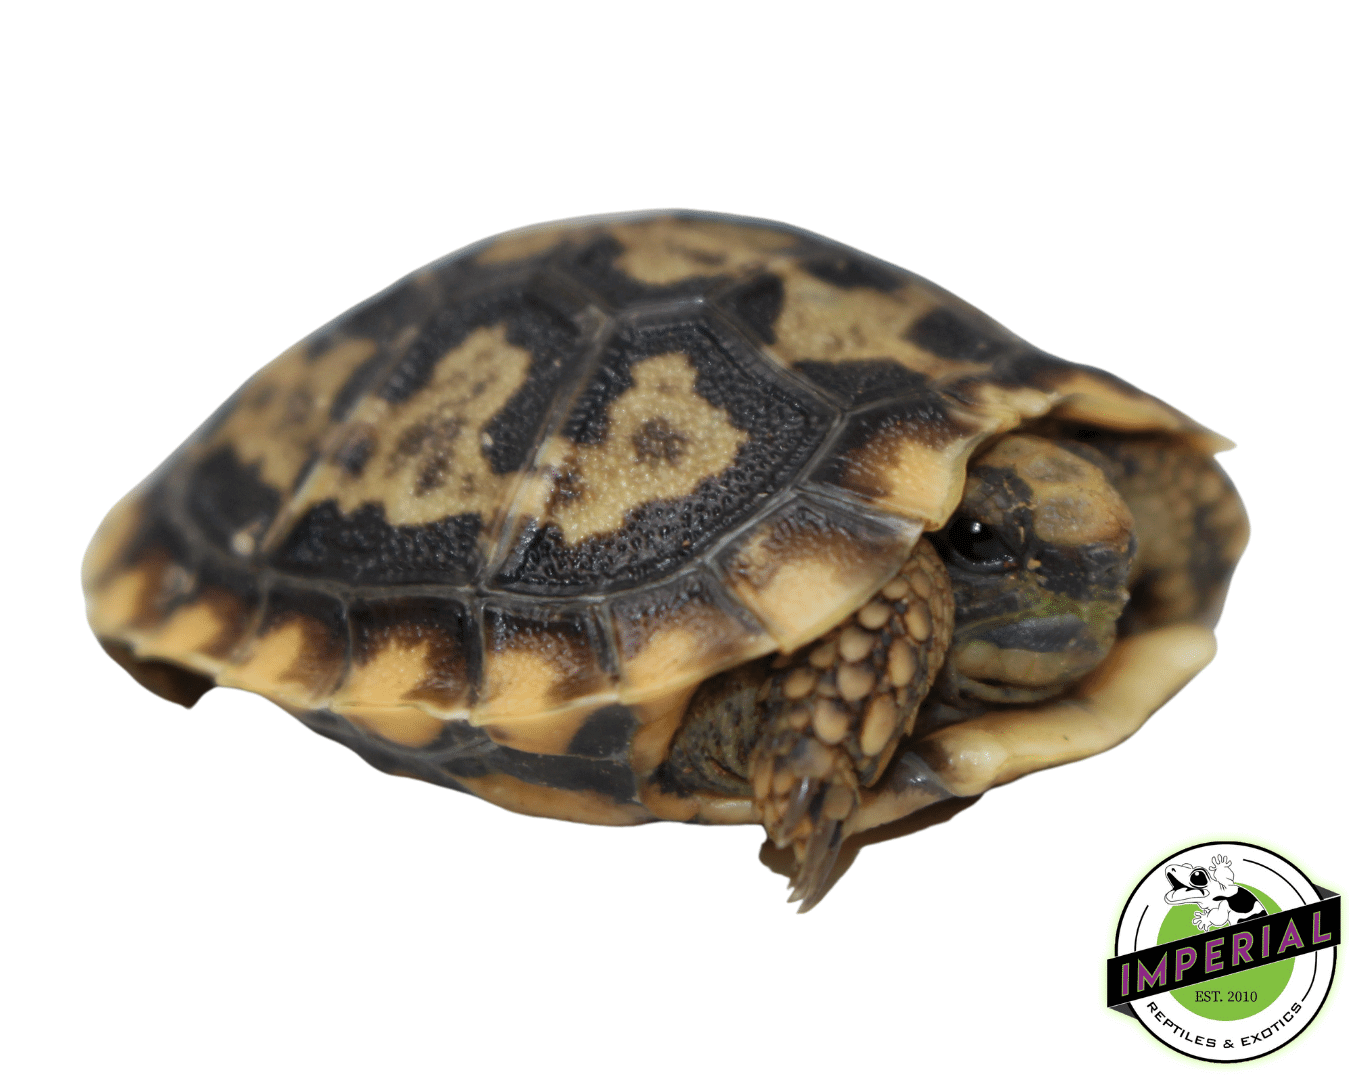 tortoise for sale, buy reptiles online